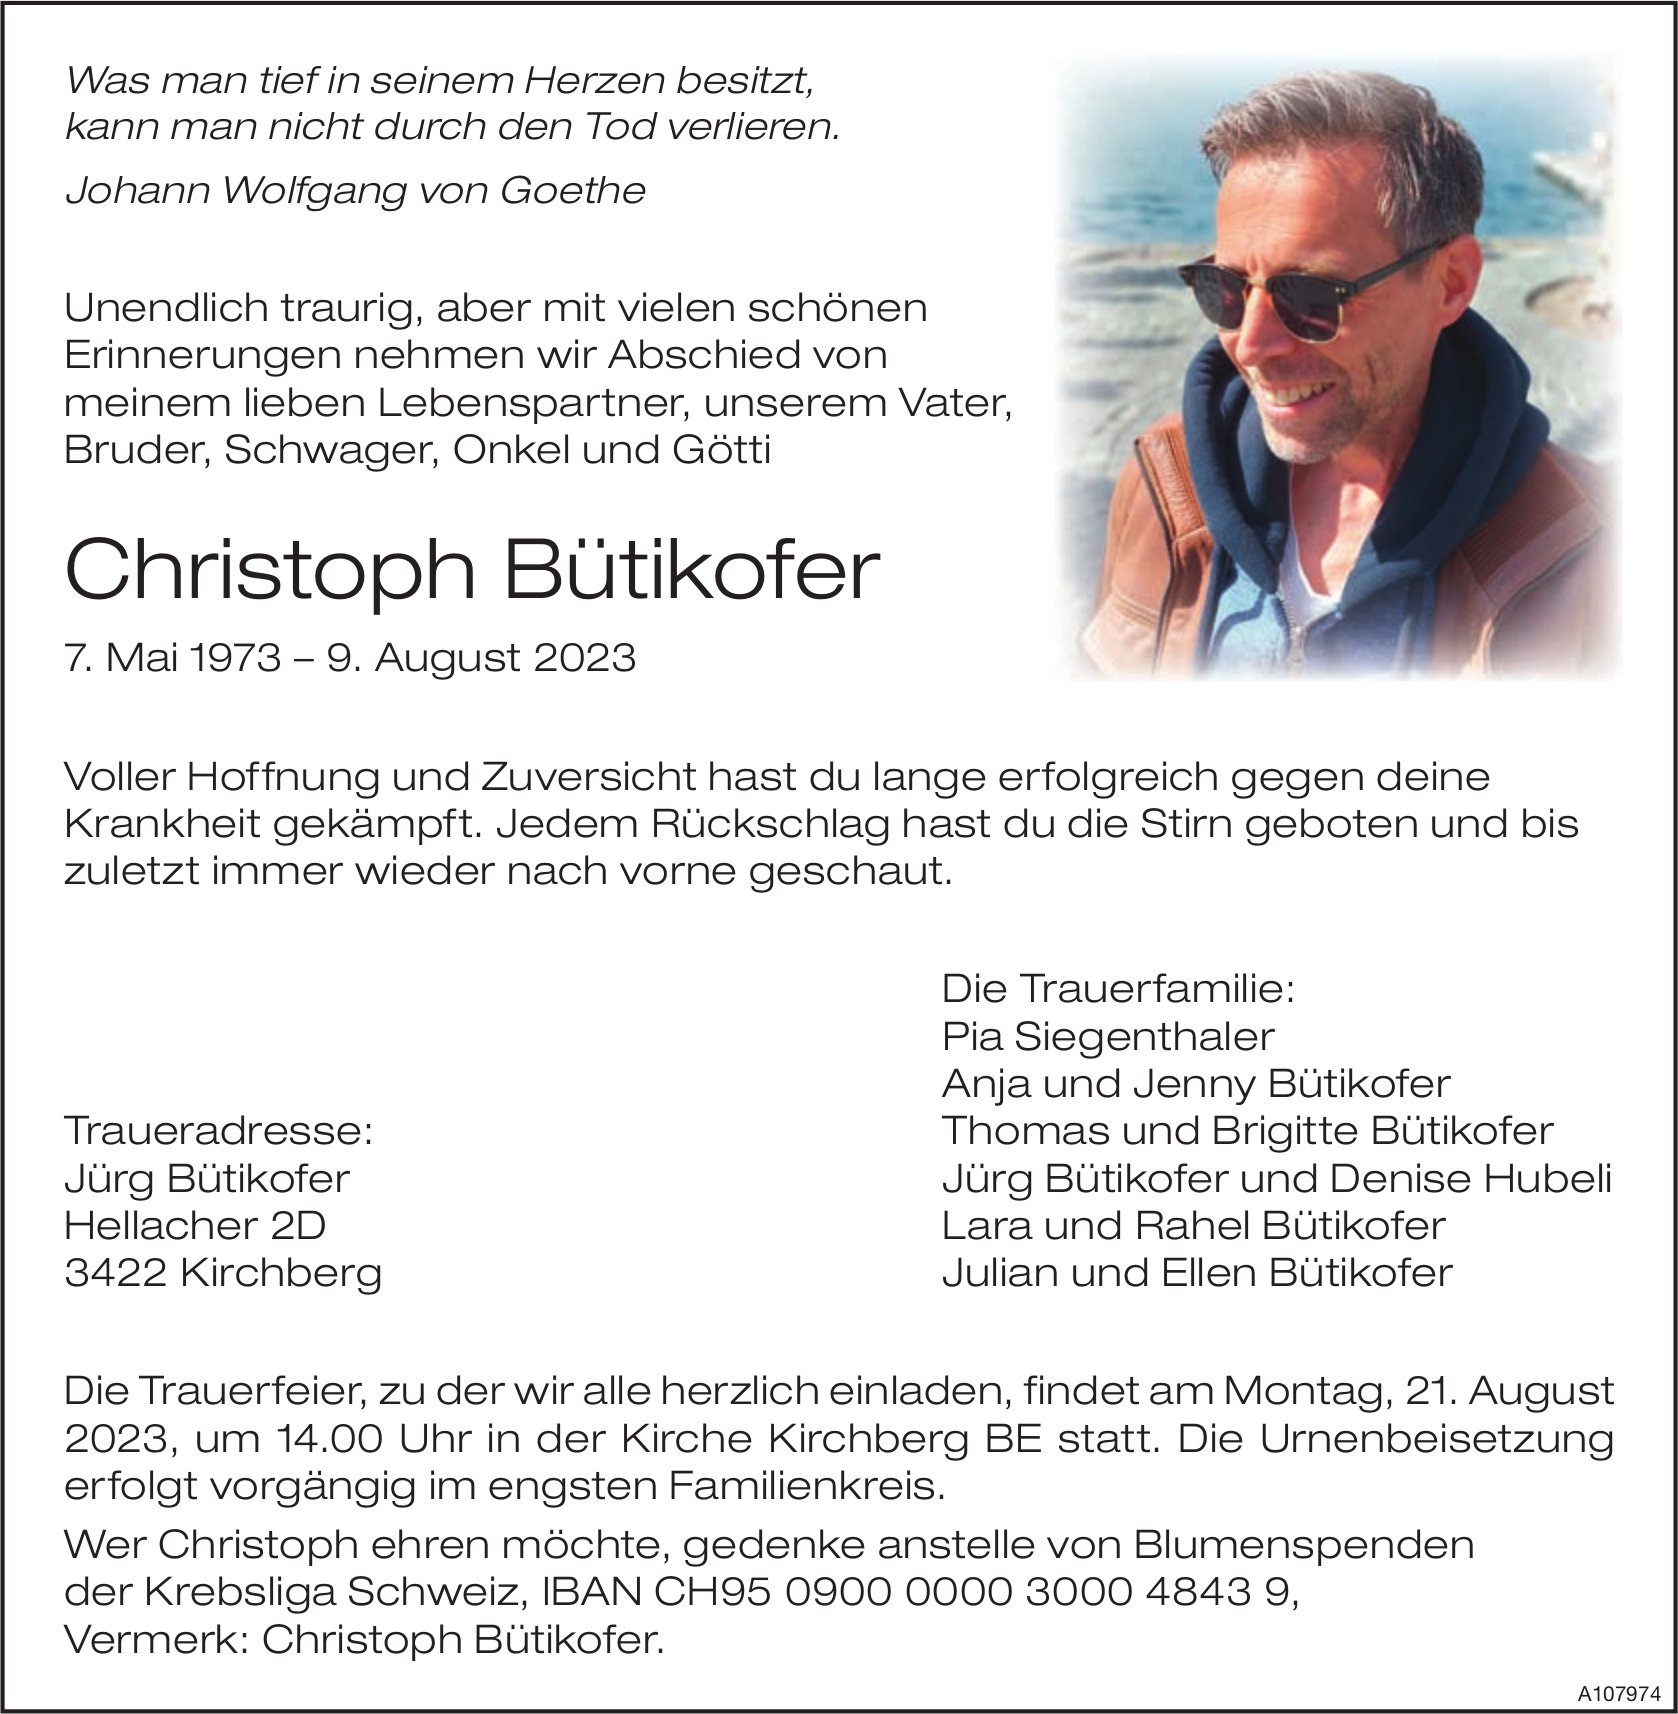 Christoph Bütikofer, August 2023 / TA